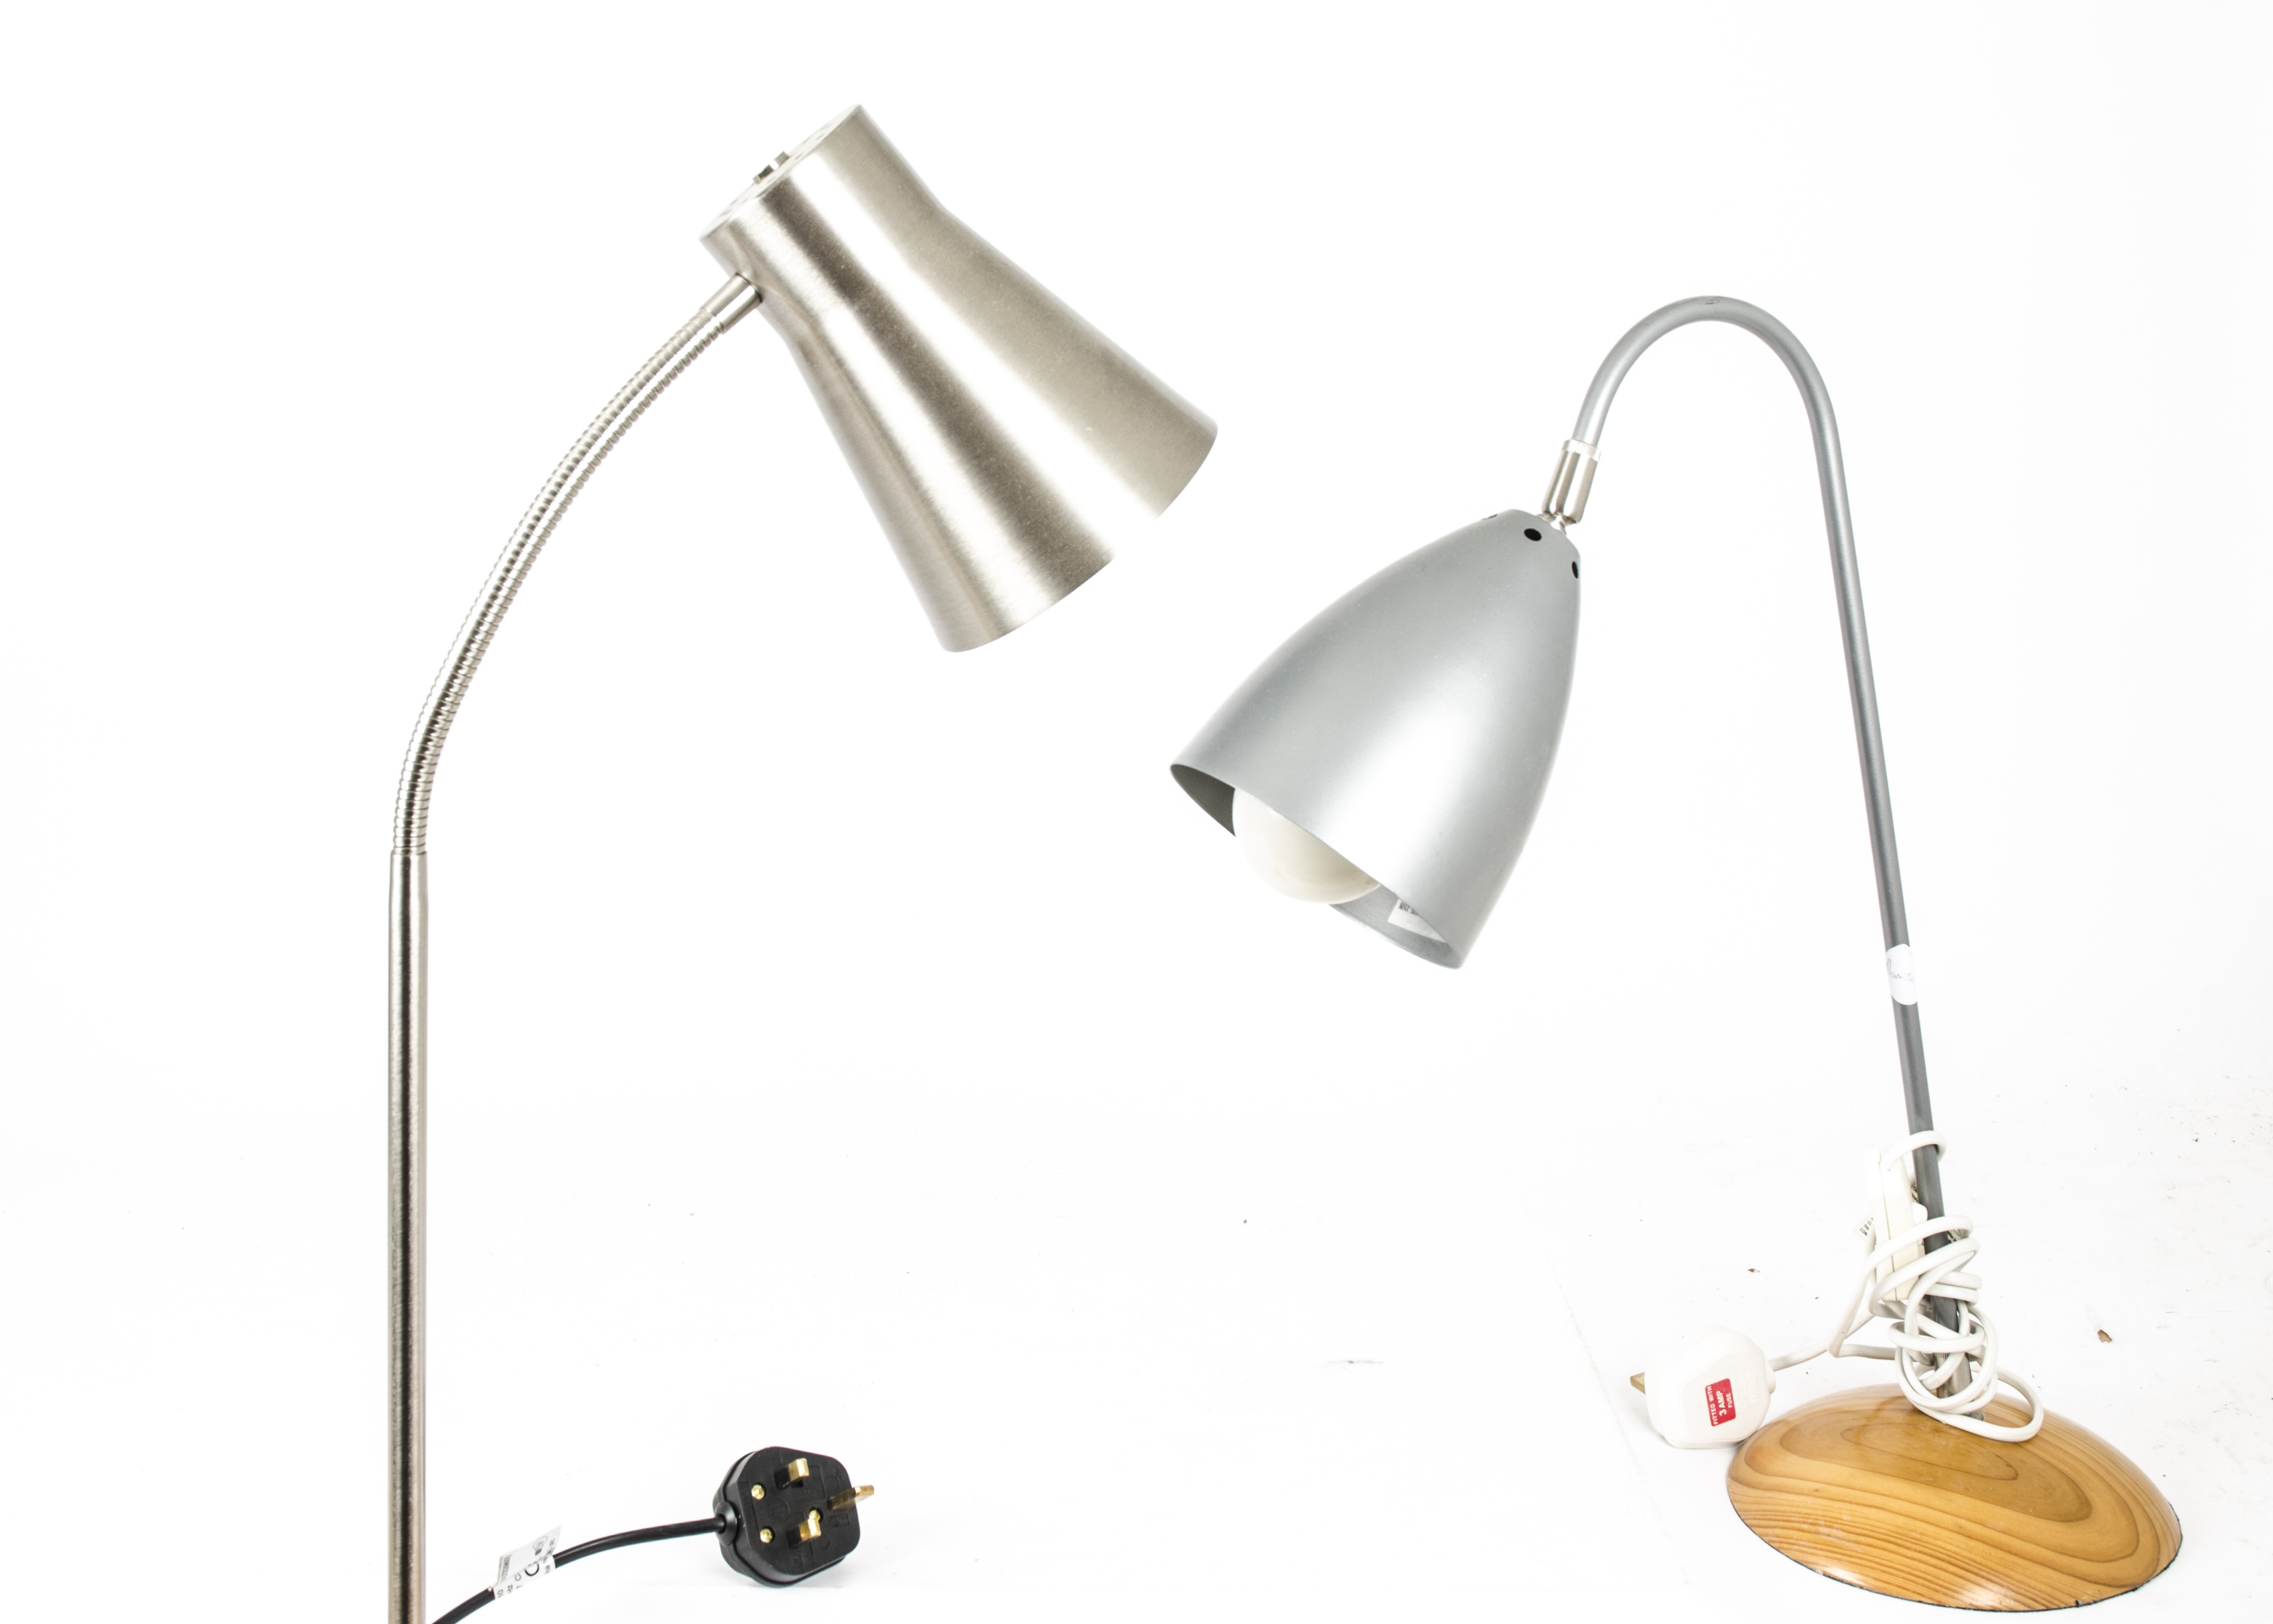 Contemporary Desk Lamp and Standard Spot Lamp, an adjustable metal desk lamp on wooden plinth (